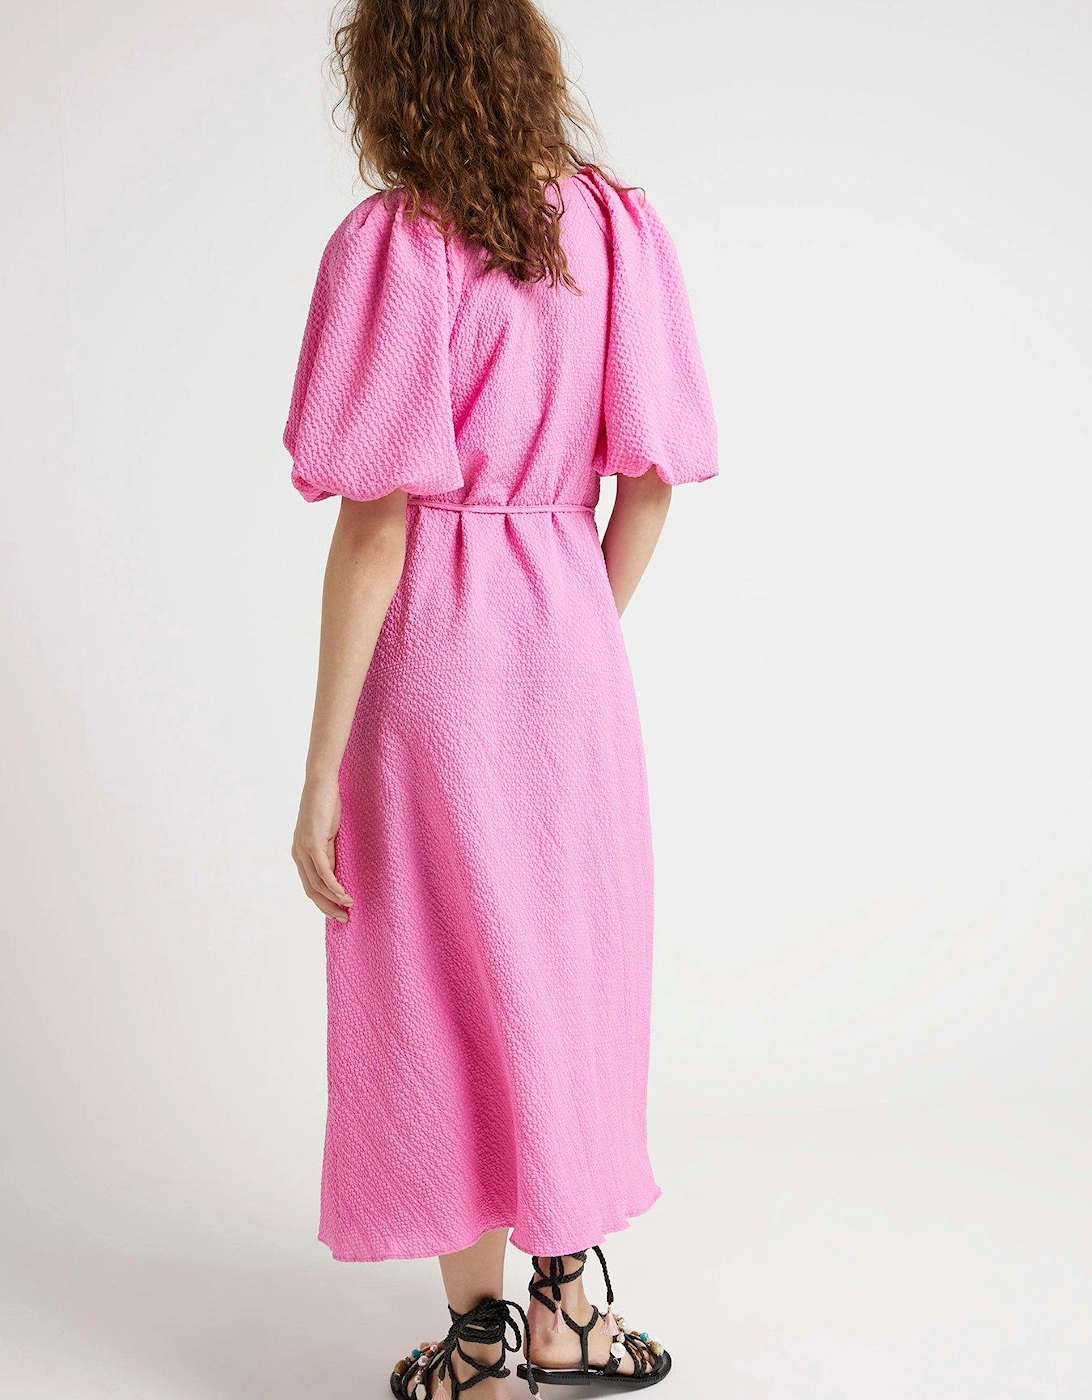 Puff Sleeve Belted Dress - Medium Pink